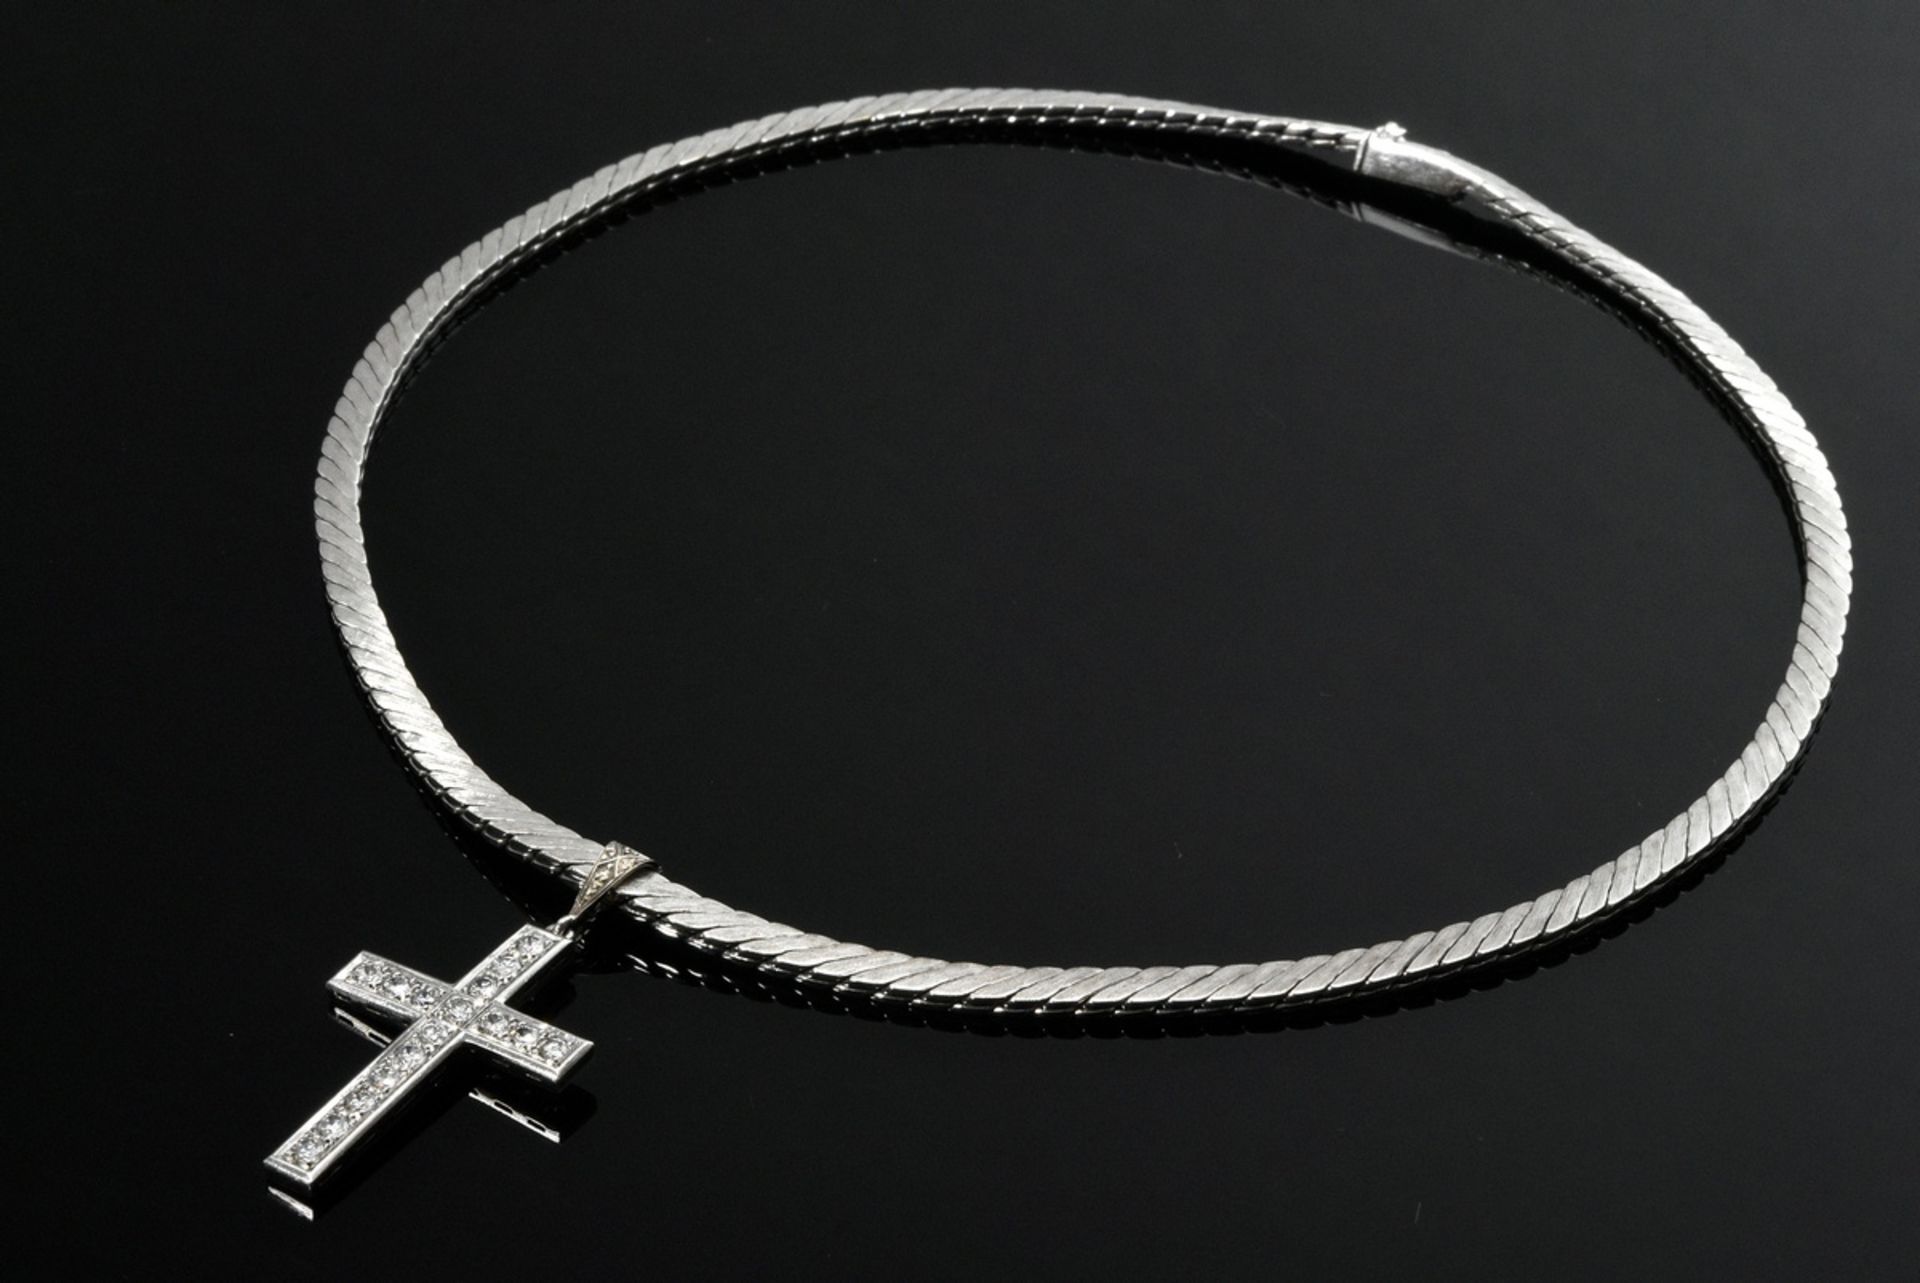 Wide satin white gold 585 necklace (42g, l. 42,3cm) with brilliant cut diamond "cross" pendant clip - Image 3 of 3